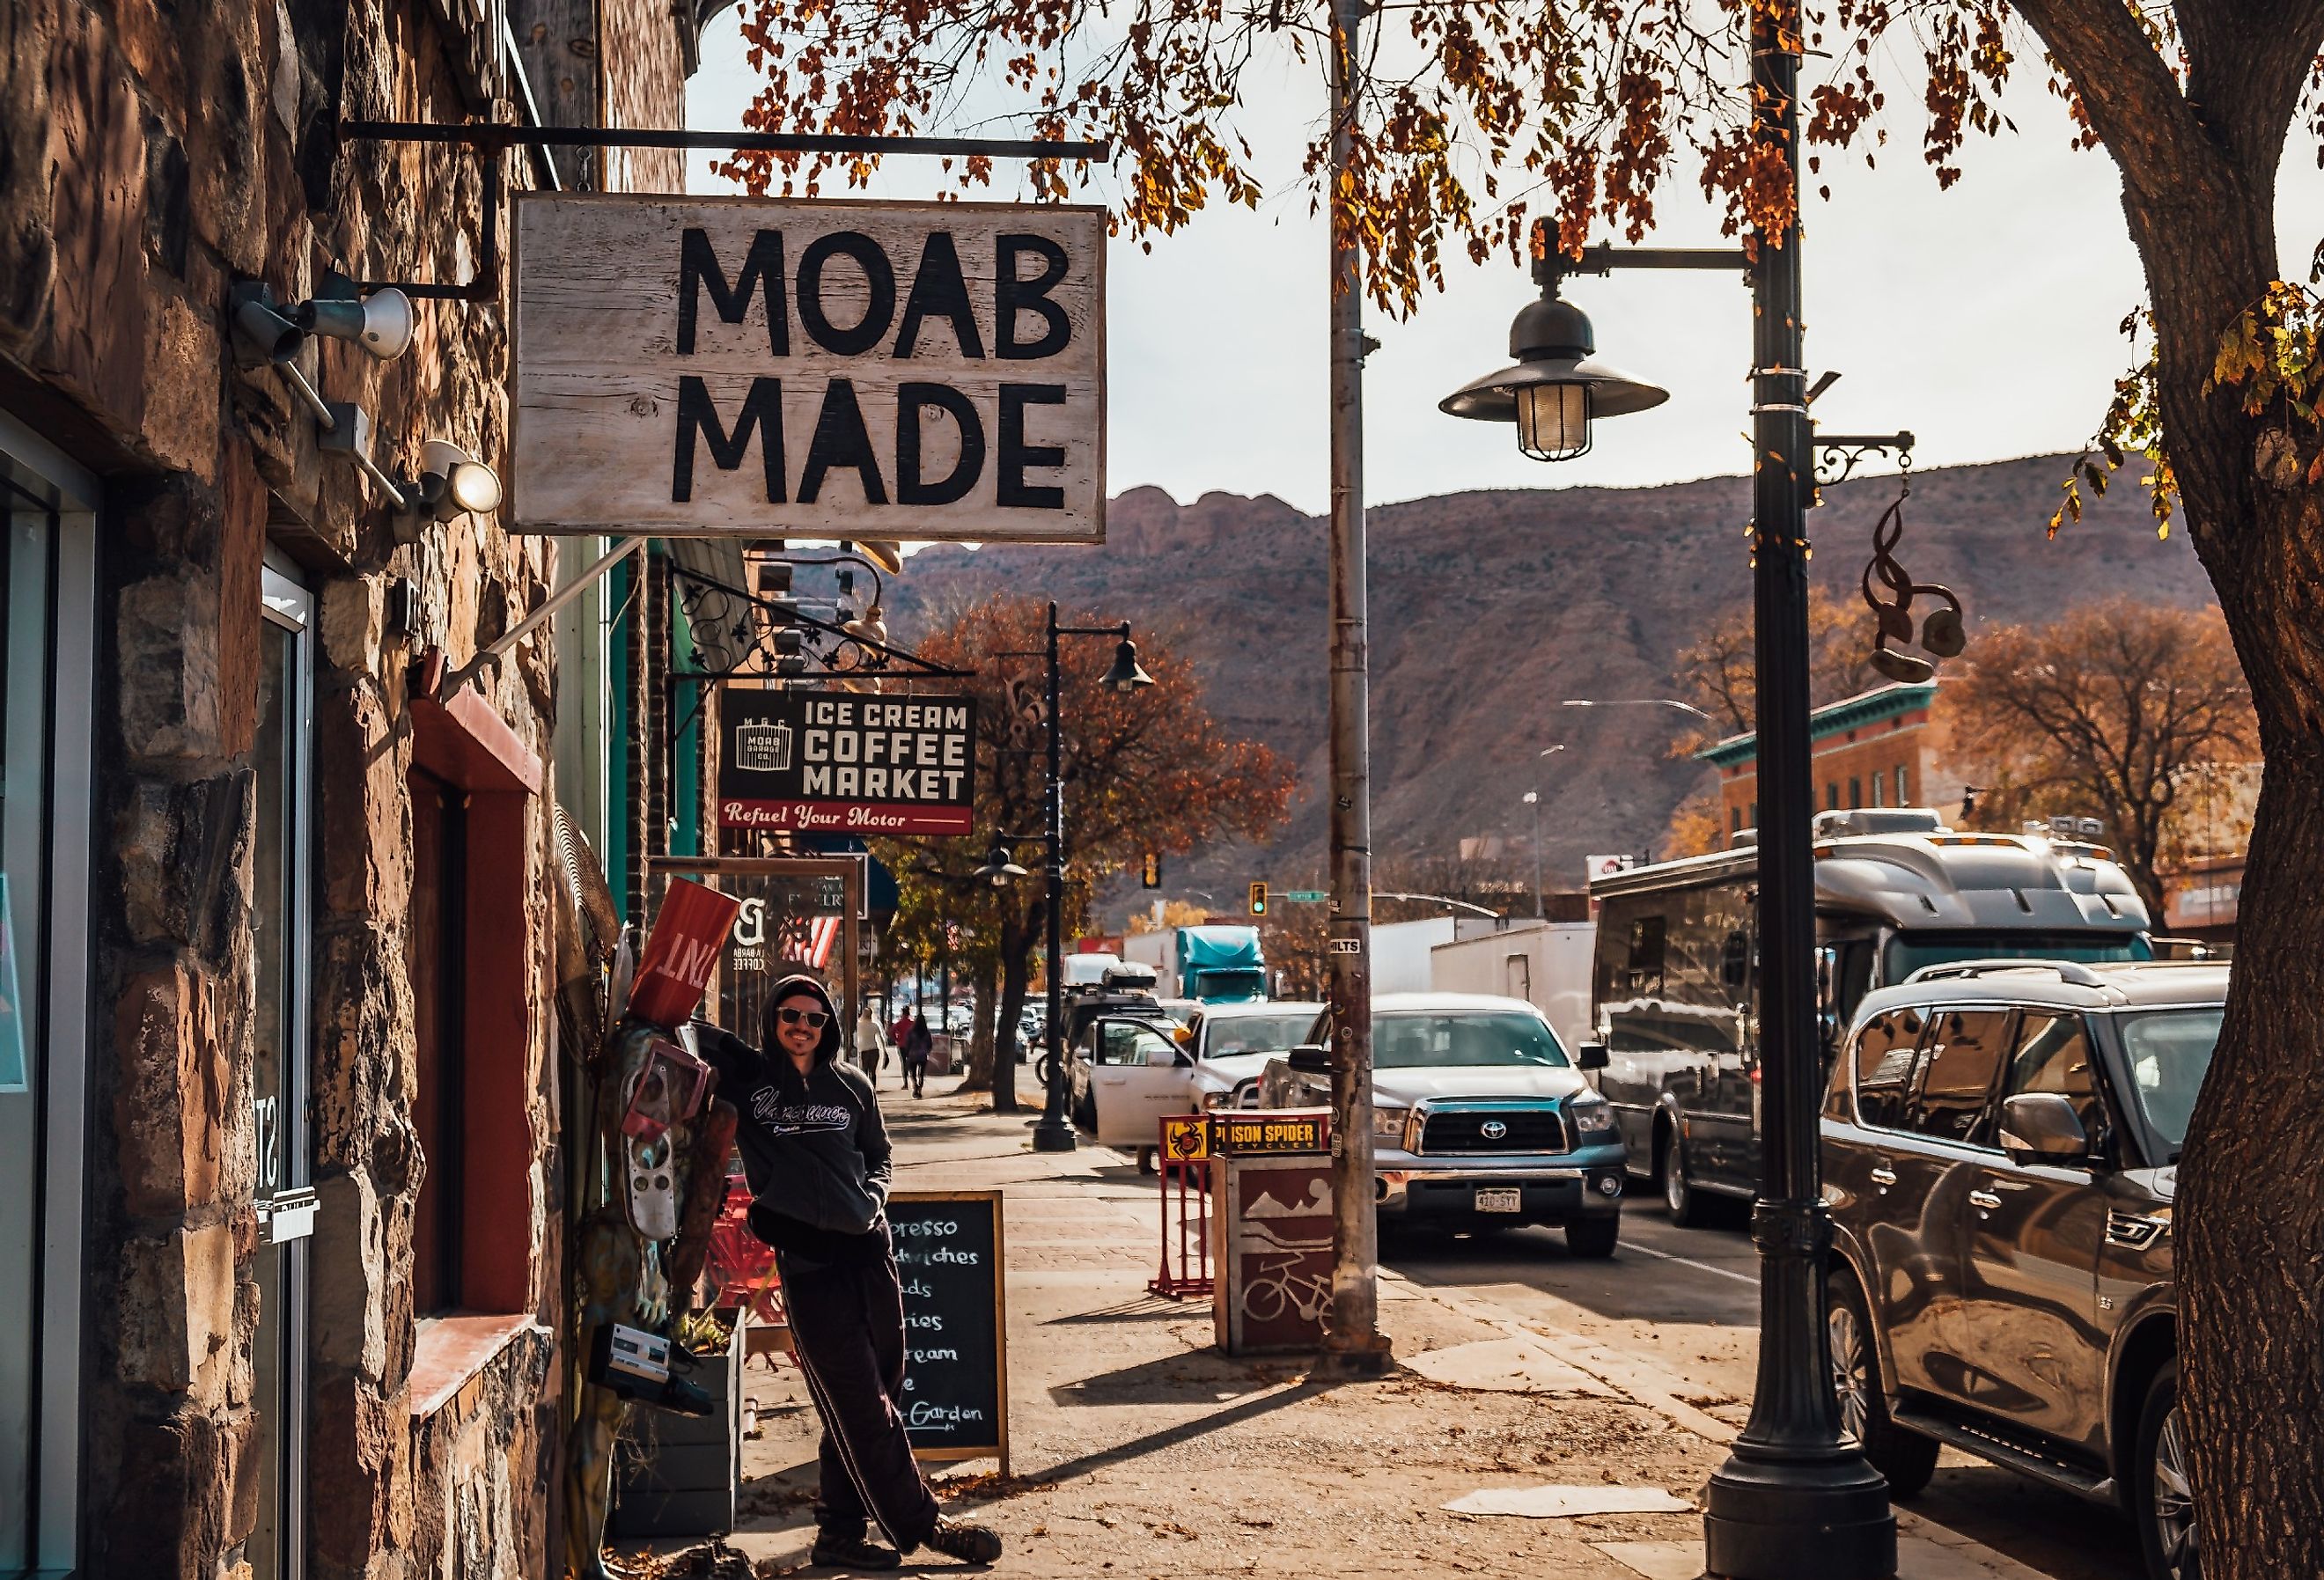 Downtown Moab, Utah. Image credit Ilhamchewadventures via Shutterstock